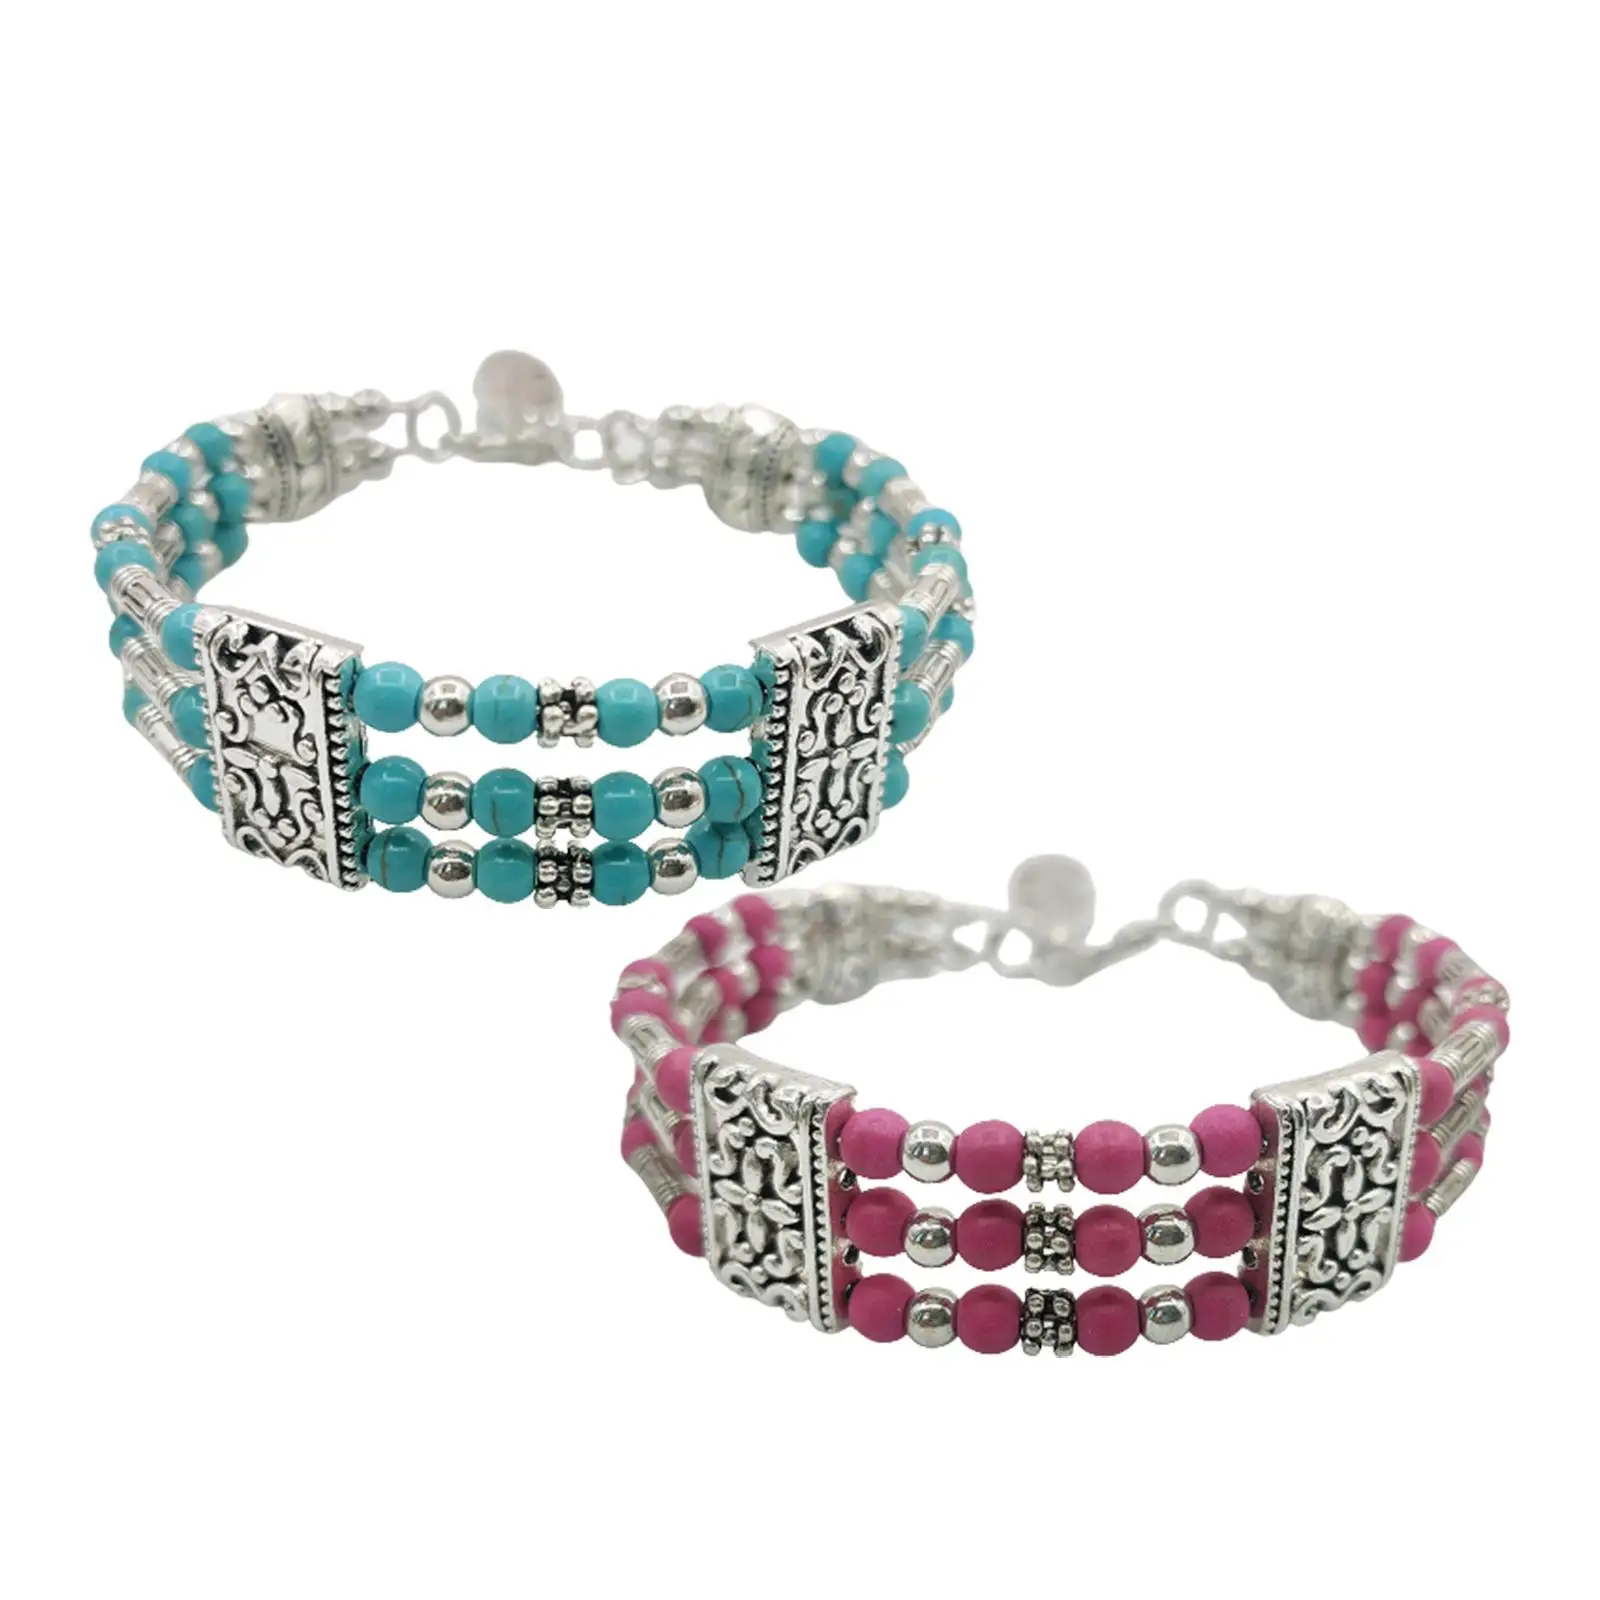 Bohemian Beaded Bracelets Jewelry Gifts Stylish Vintage Elegant Wrap Bracelet for Women Girls Party Dance Prom Dance Anniversary